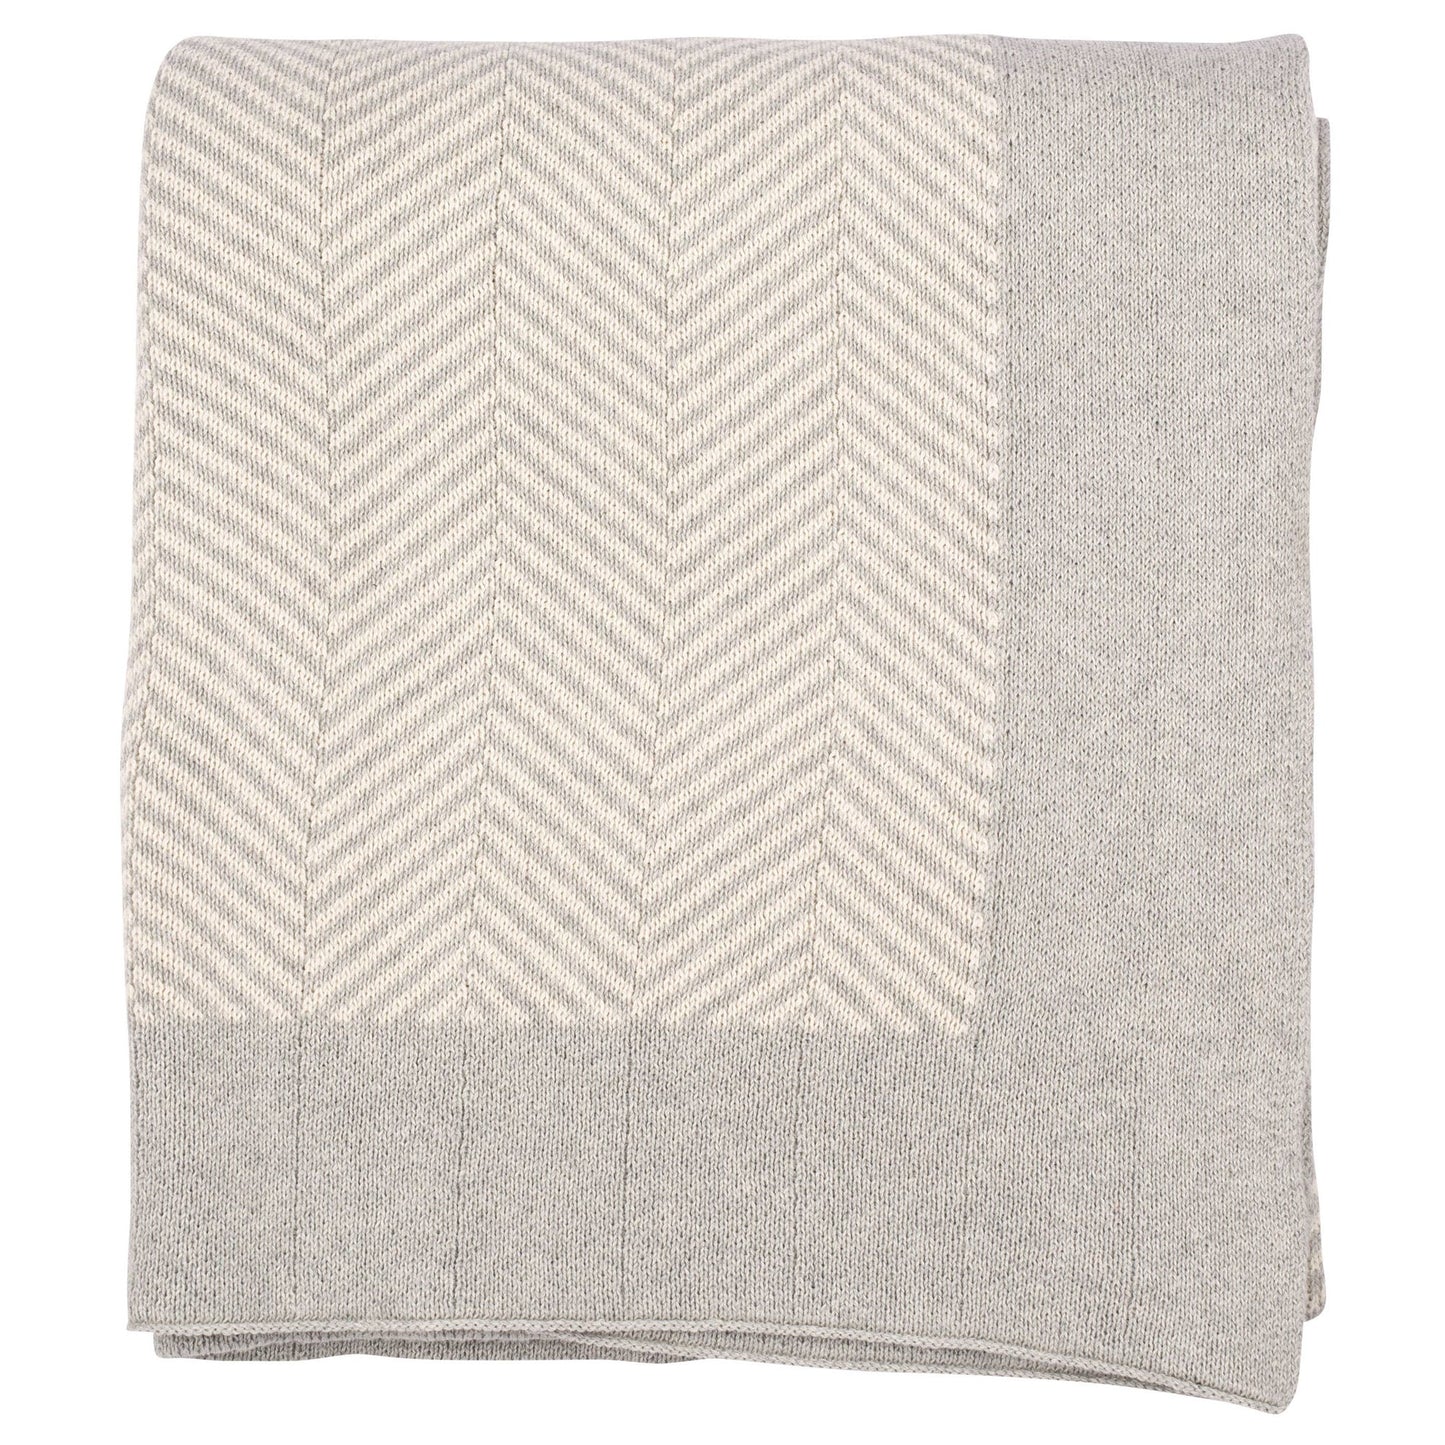 Herringbone Cotton Knit Throw Blanket